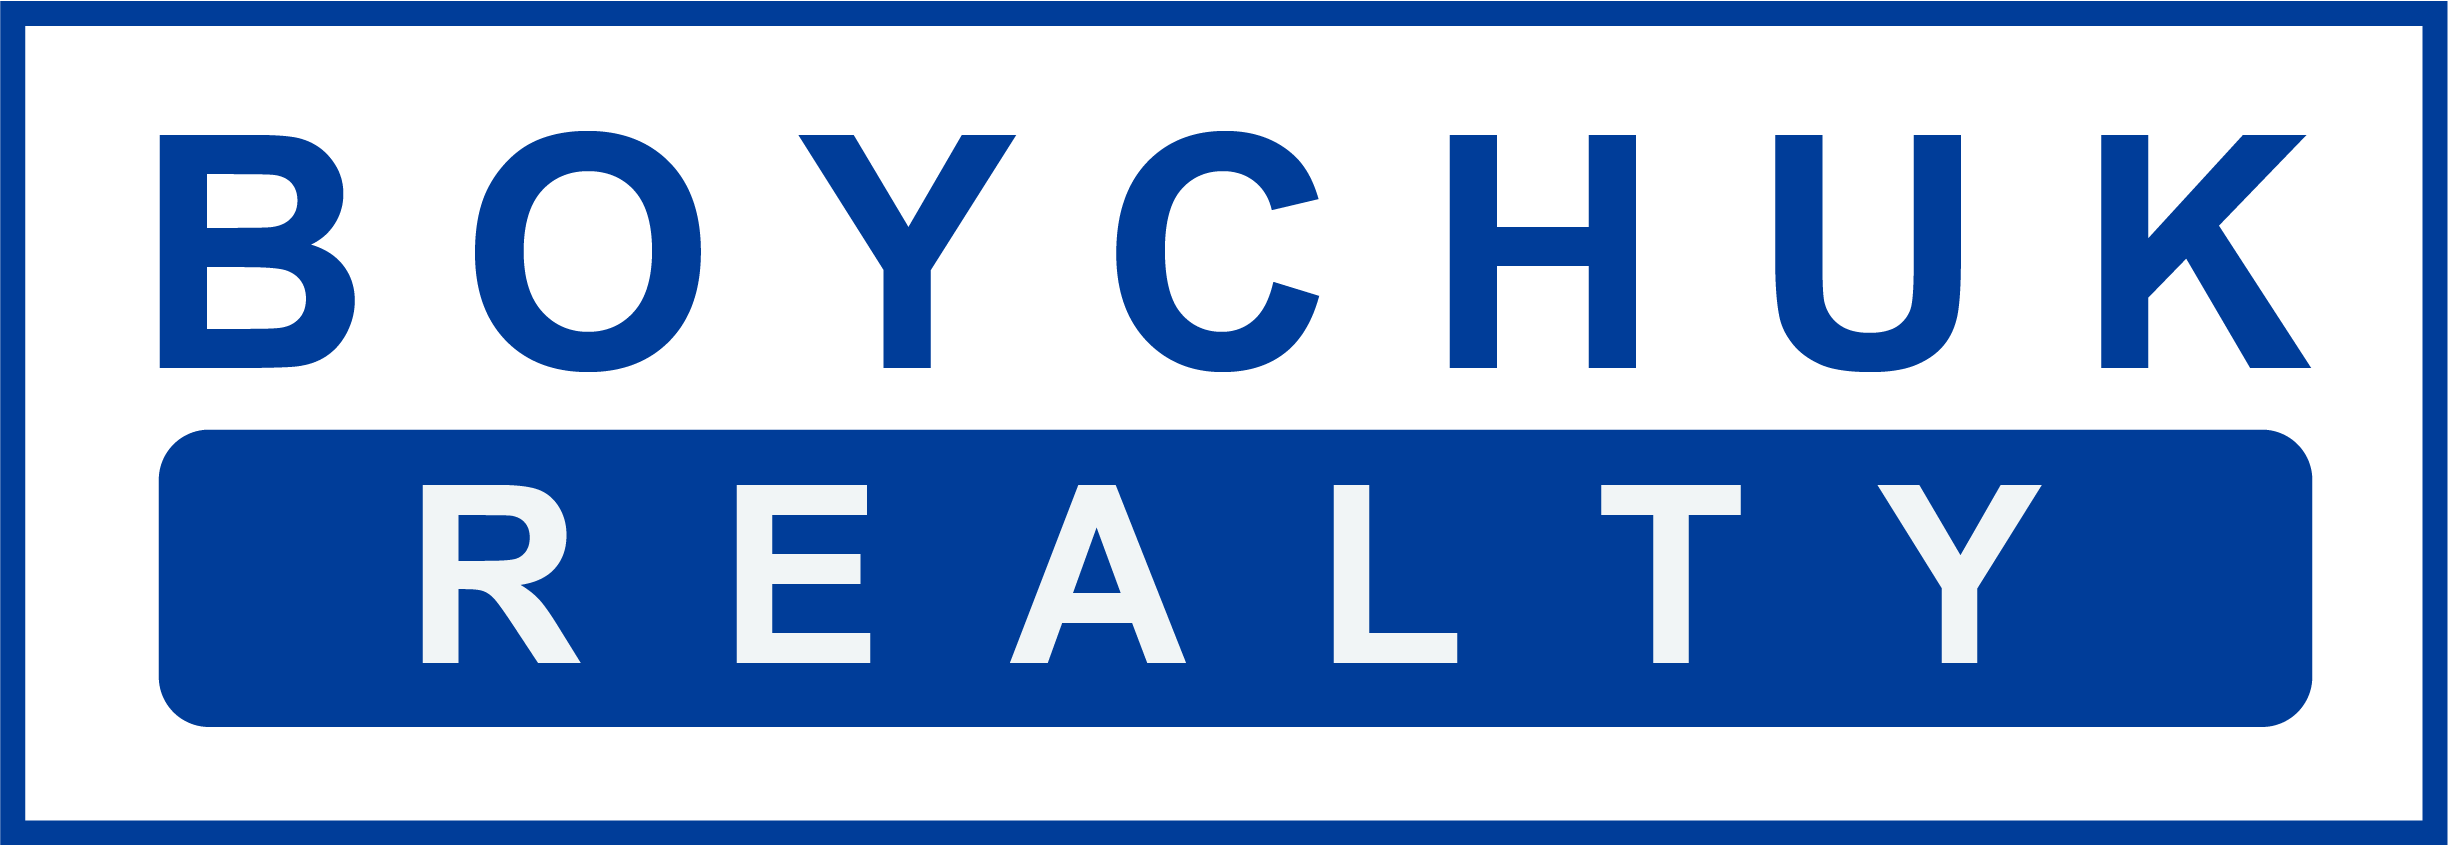 Boychuk Realty Ltd. - Mike Boychuk Team